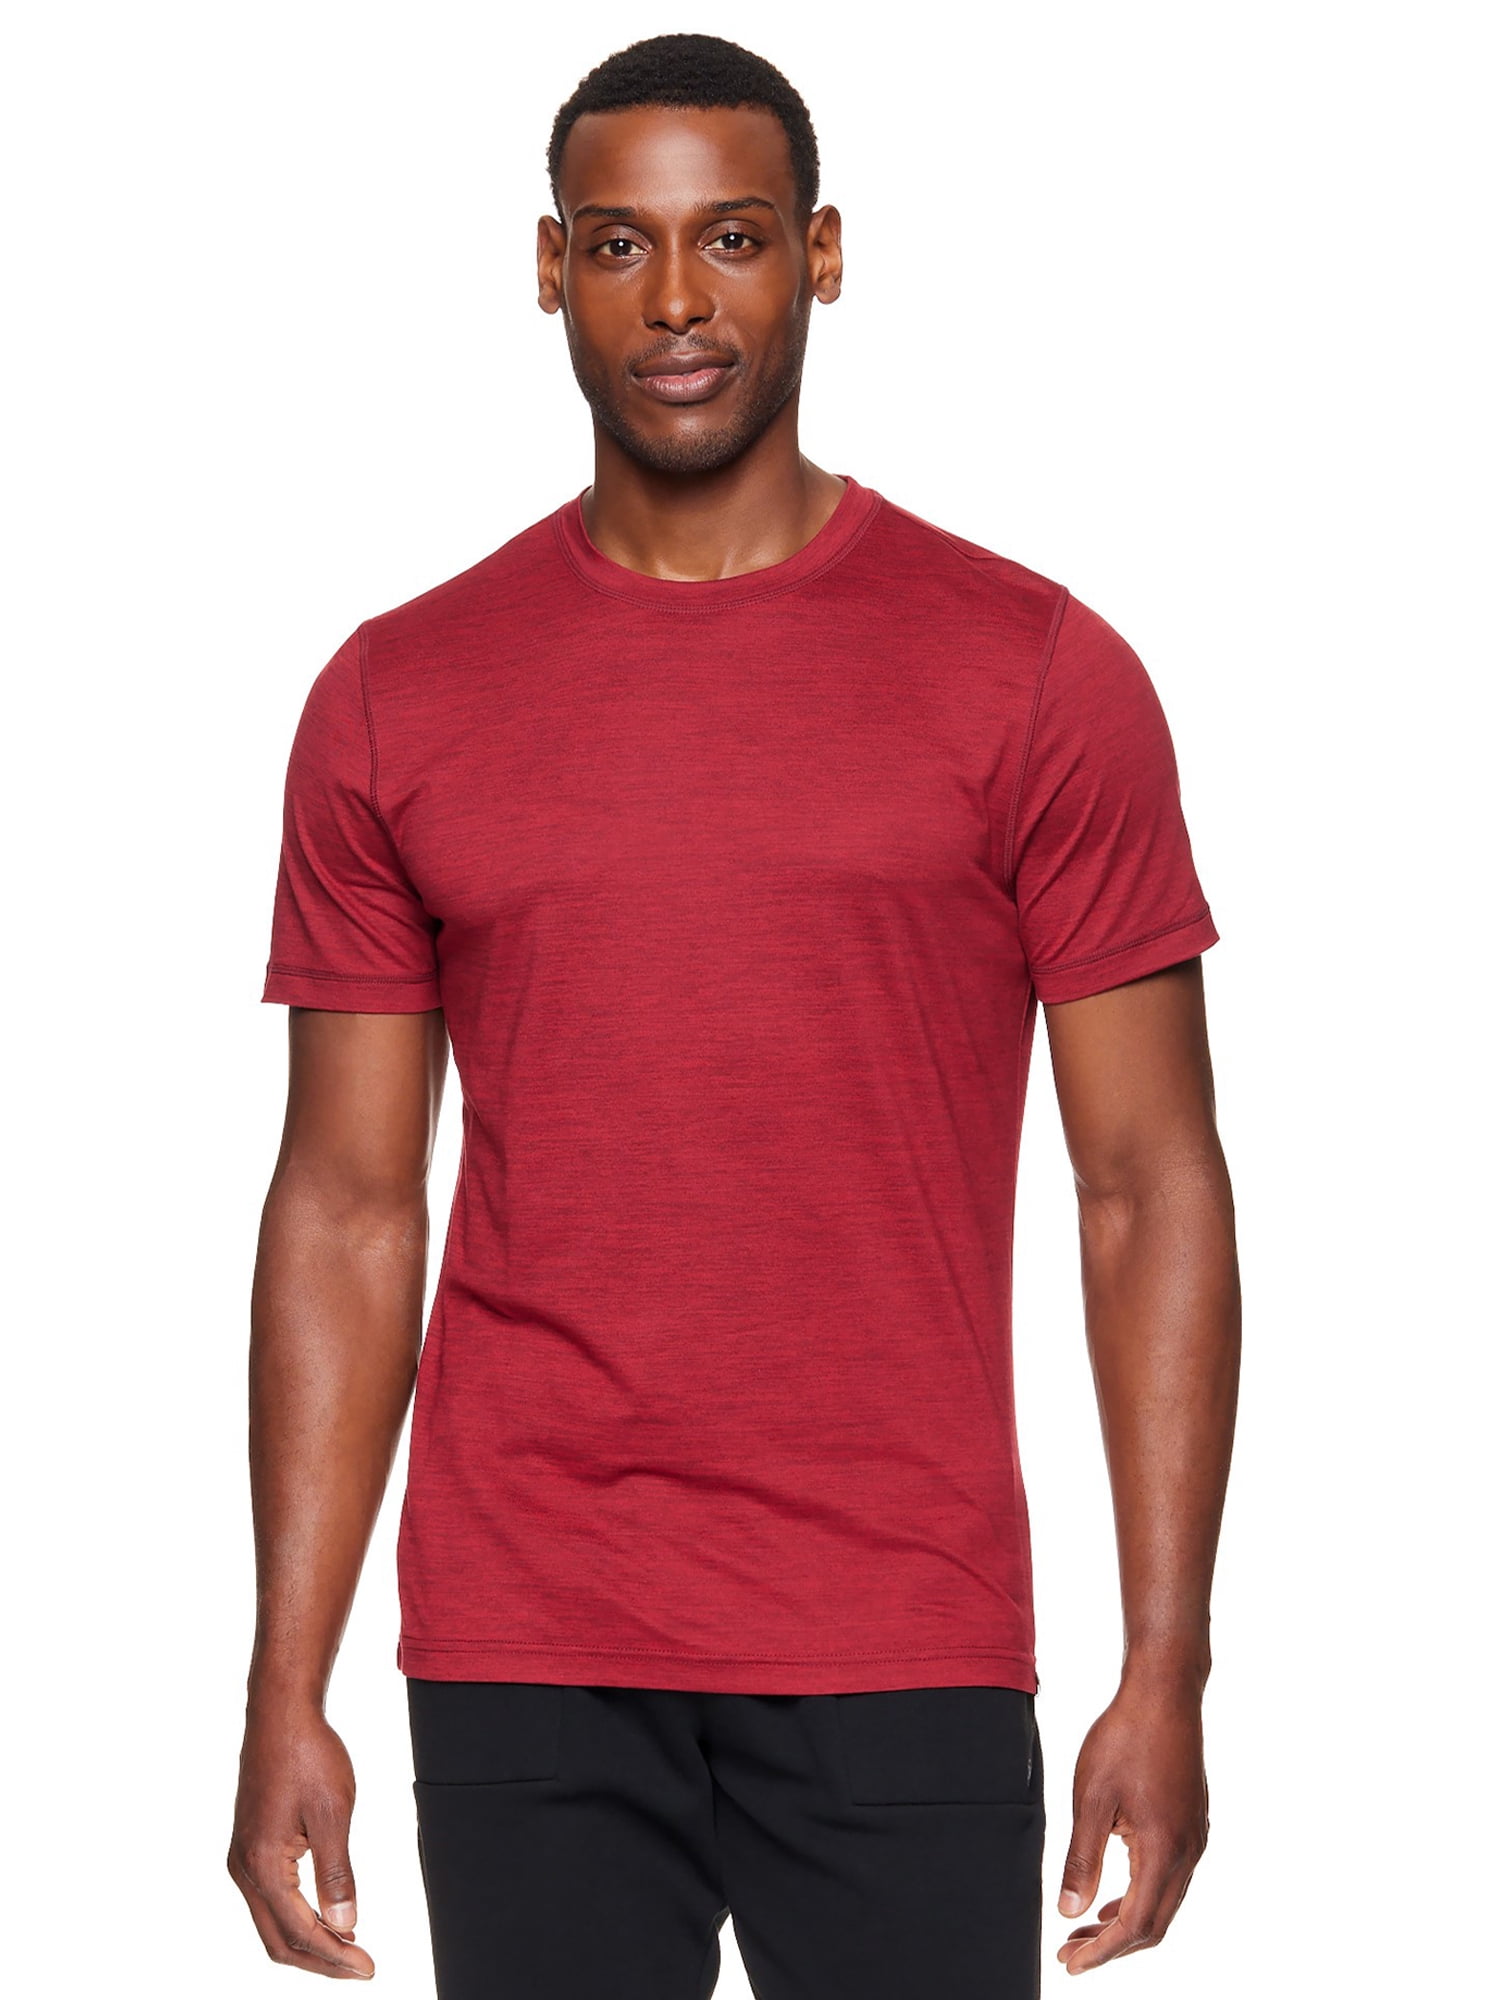 Gaiam Men's Everyday Basic Crew T-Shirt, Sizes S-XL